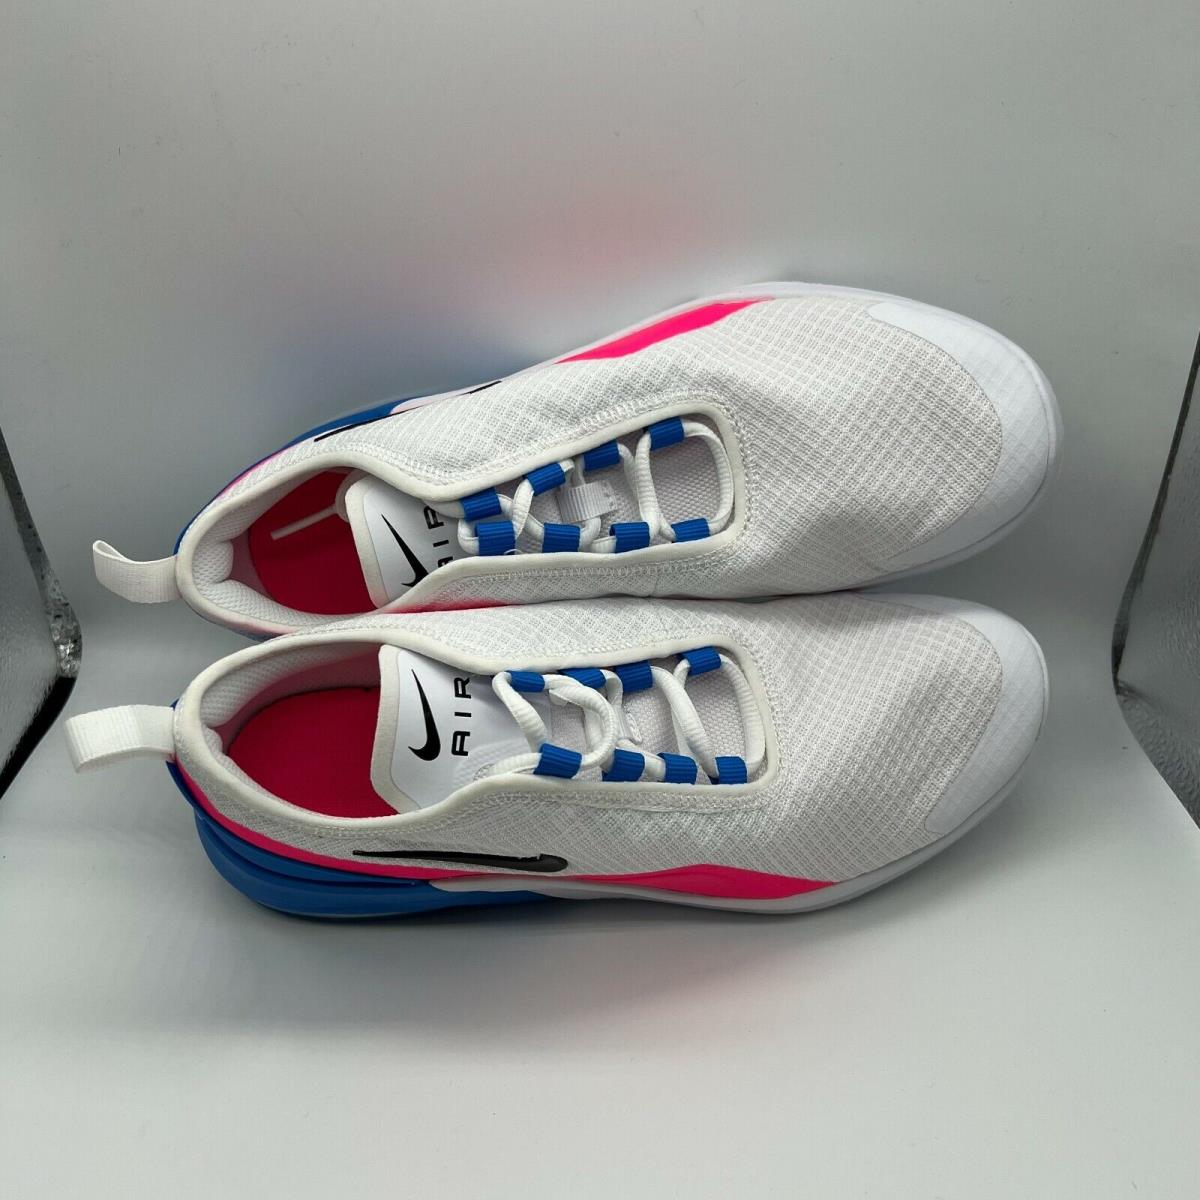 Nike shoes Sneaker Shoes - Multicolor 2